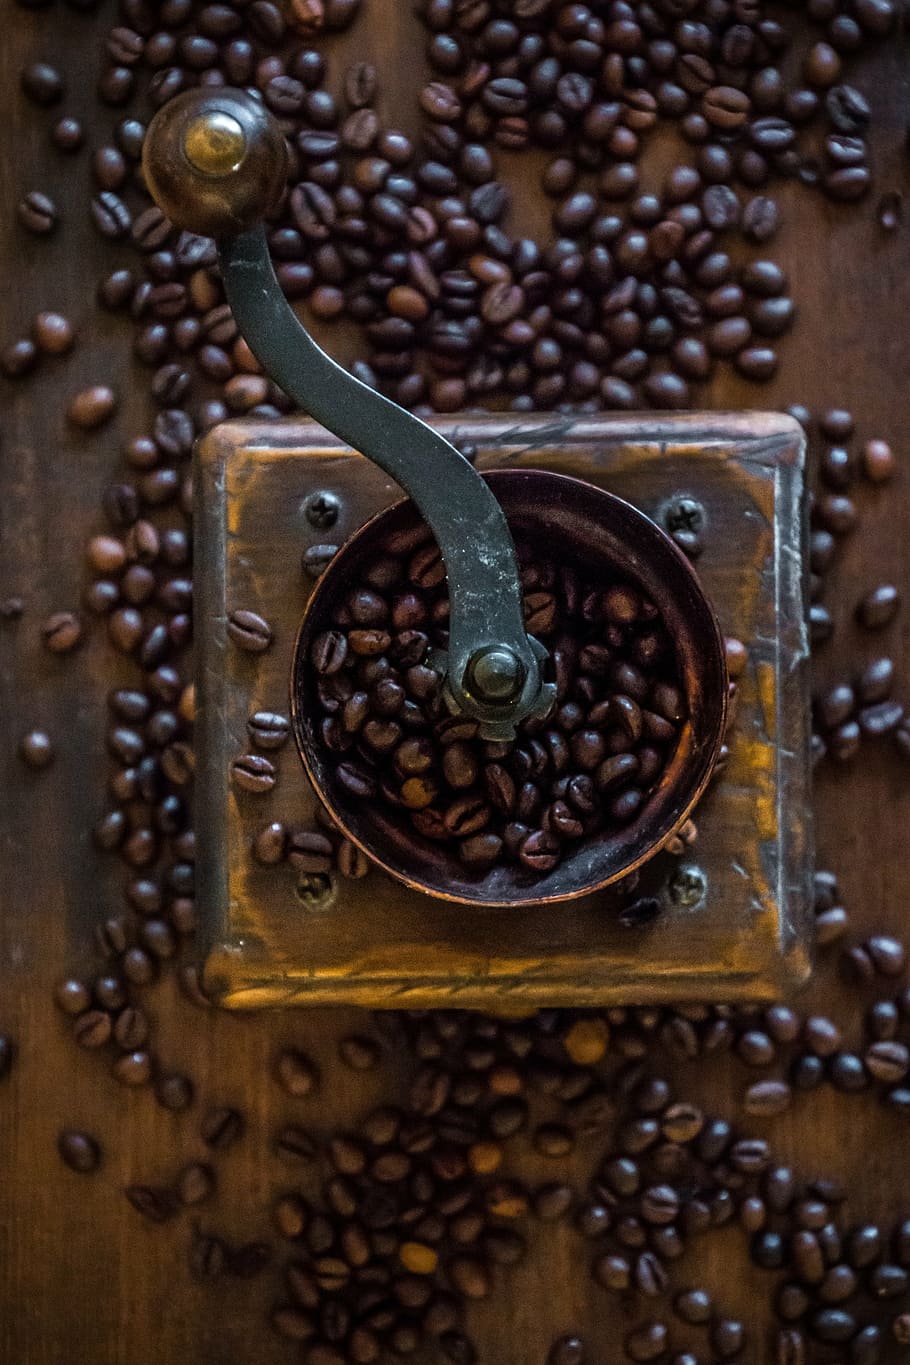 coffee grinder, coffee beans, wood plank, coffee, grinder, old coffee grinder, cafe, caffeine, drink, beans